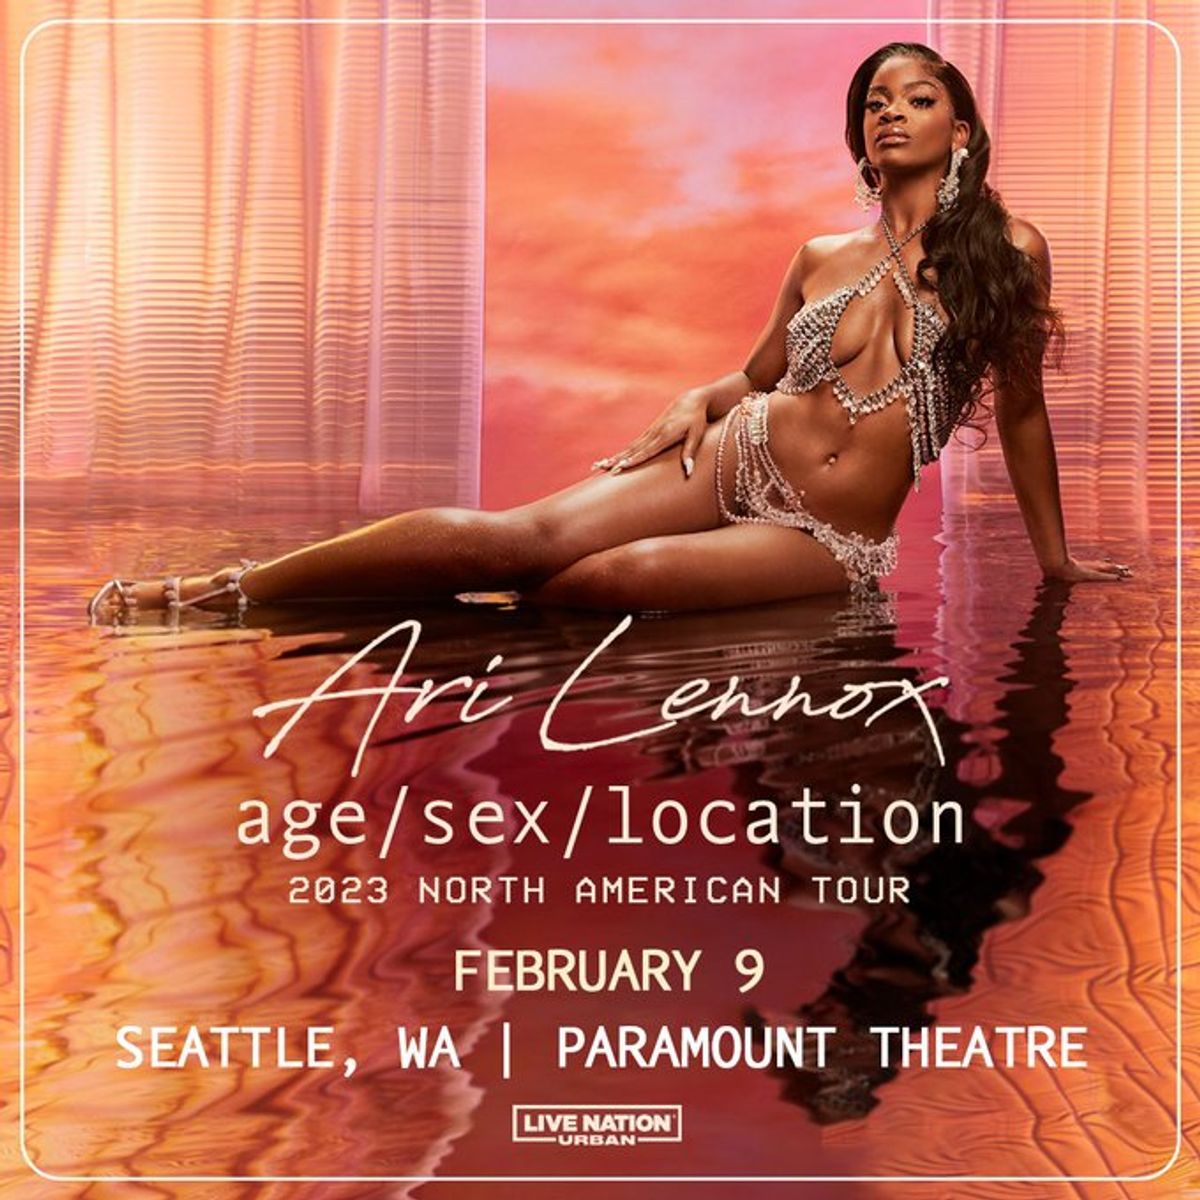 Ari Lennox Agesexlocation Tour At Paramount Theatre In Seattle Wa Thursday February 9 